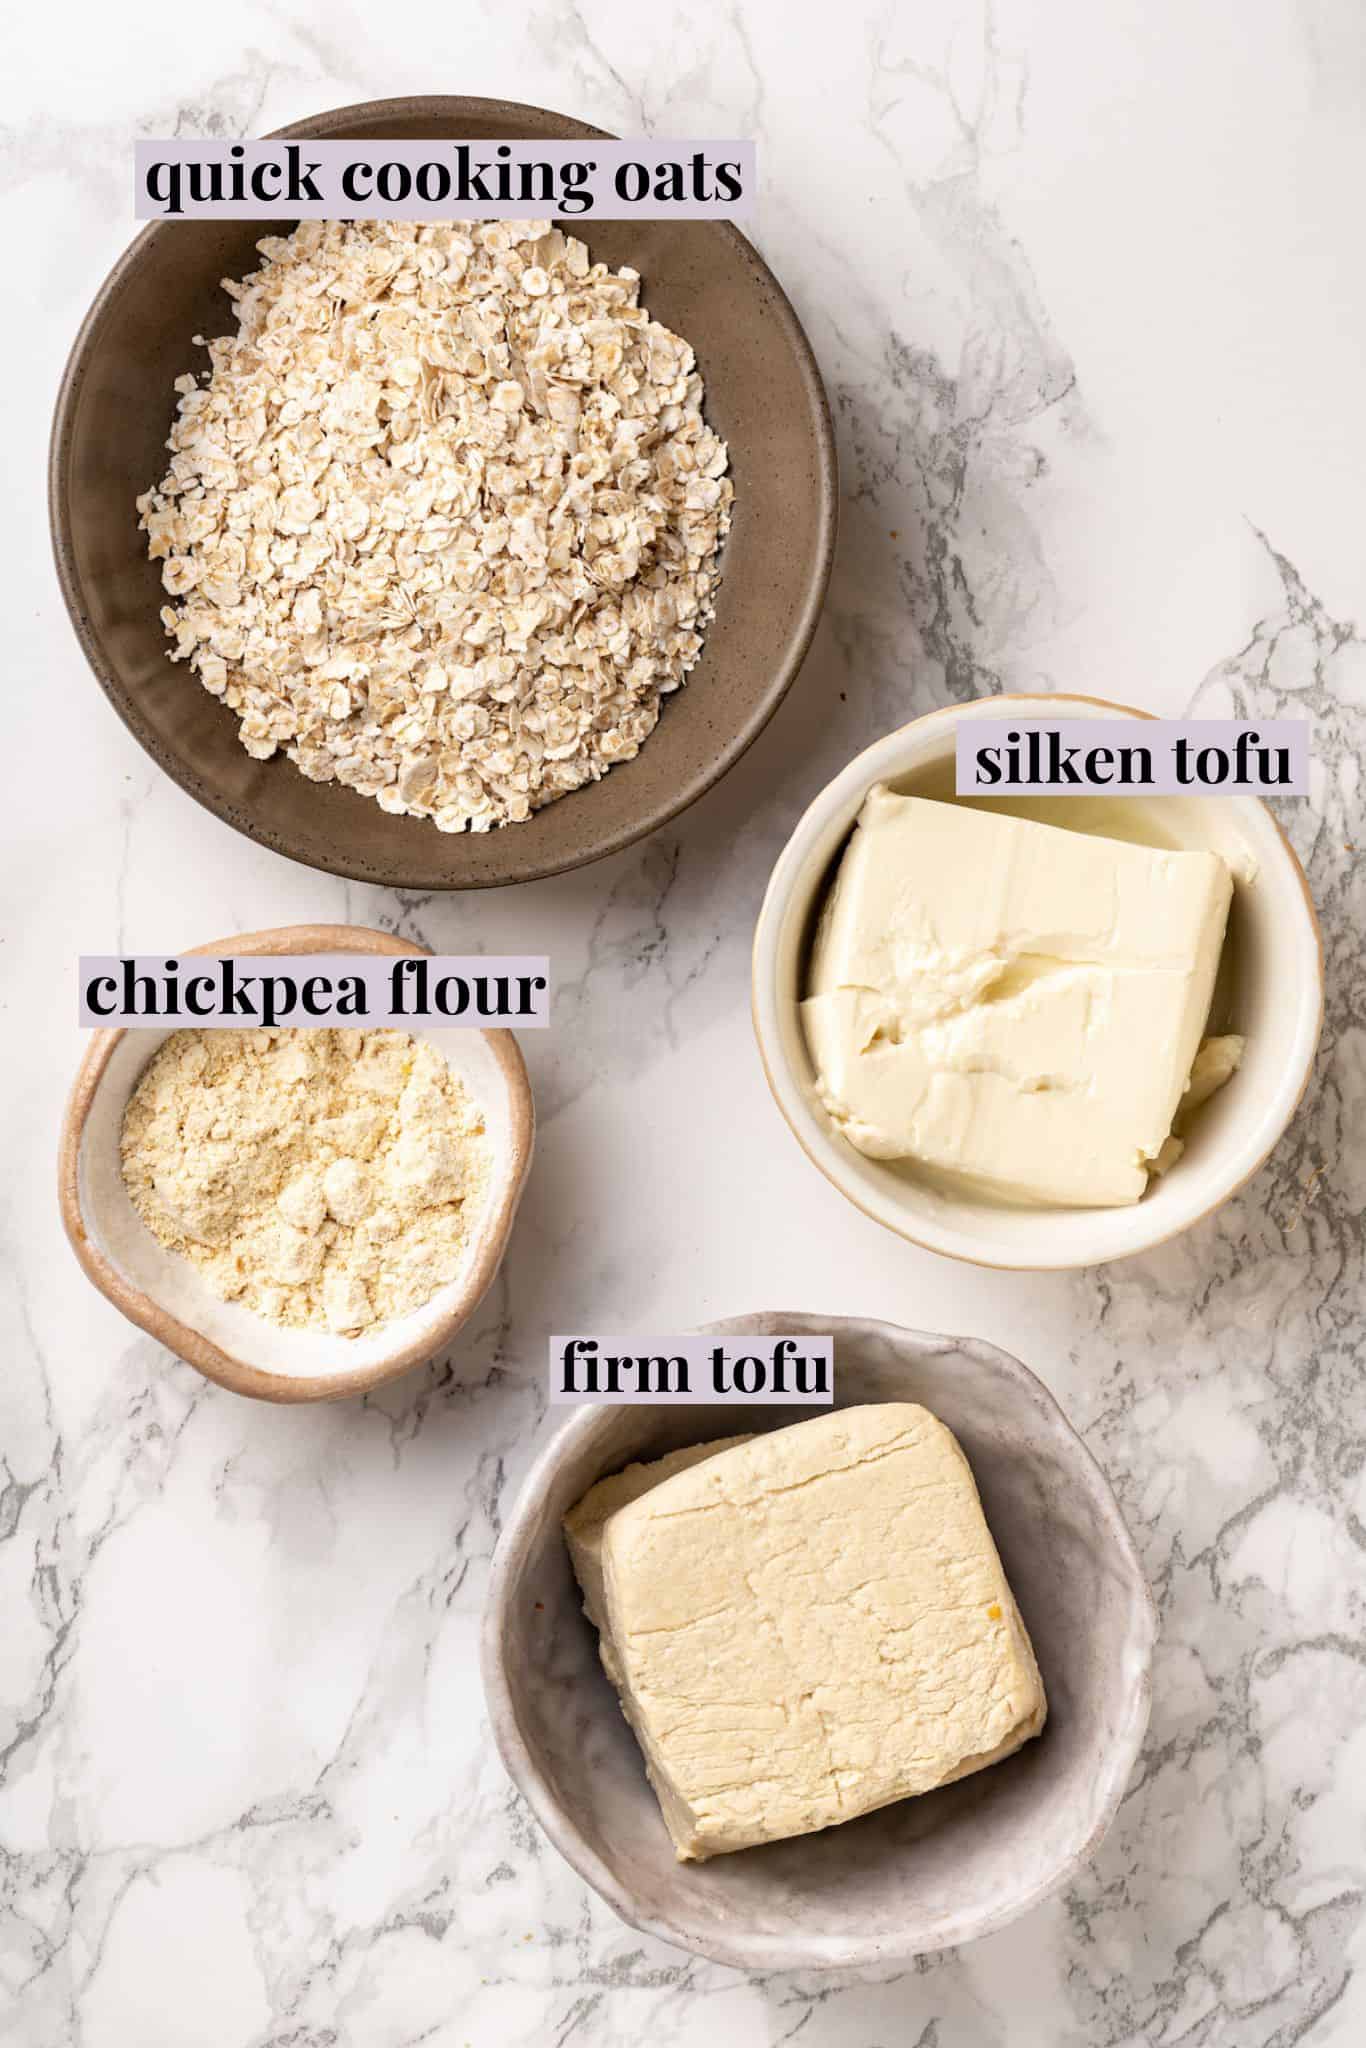 Overhead view of eggs, firm tofu, silken tofu, and chickpea flour